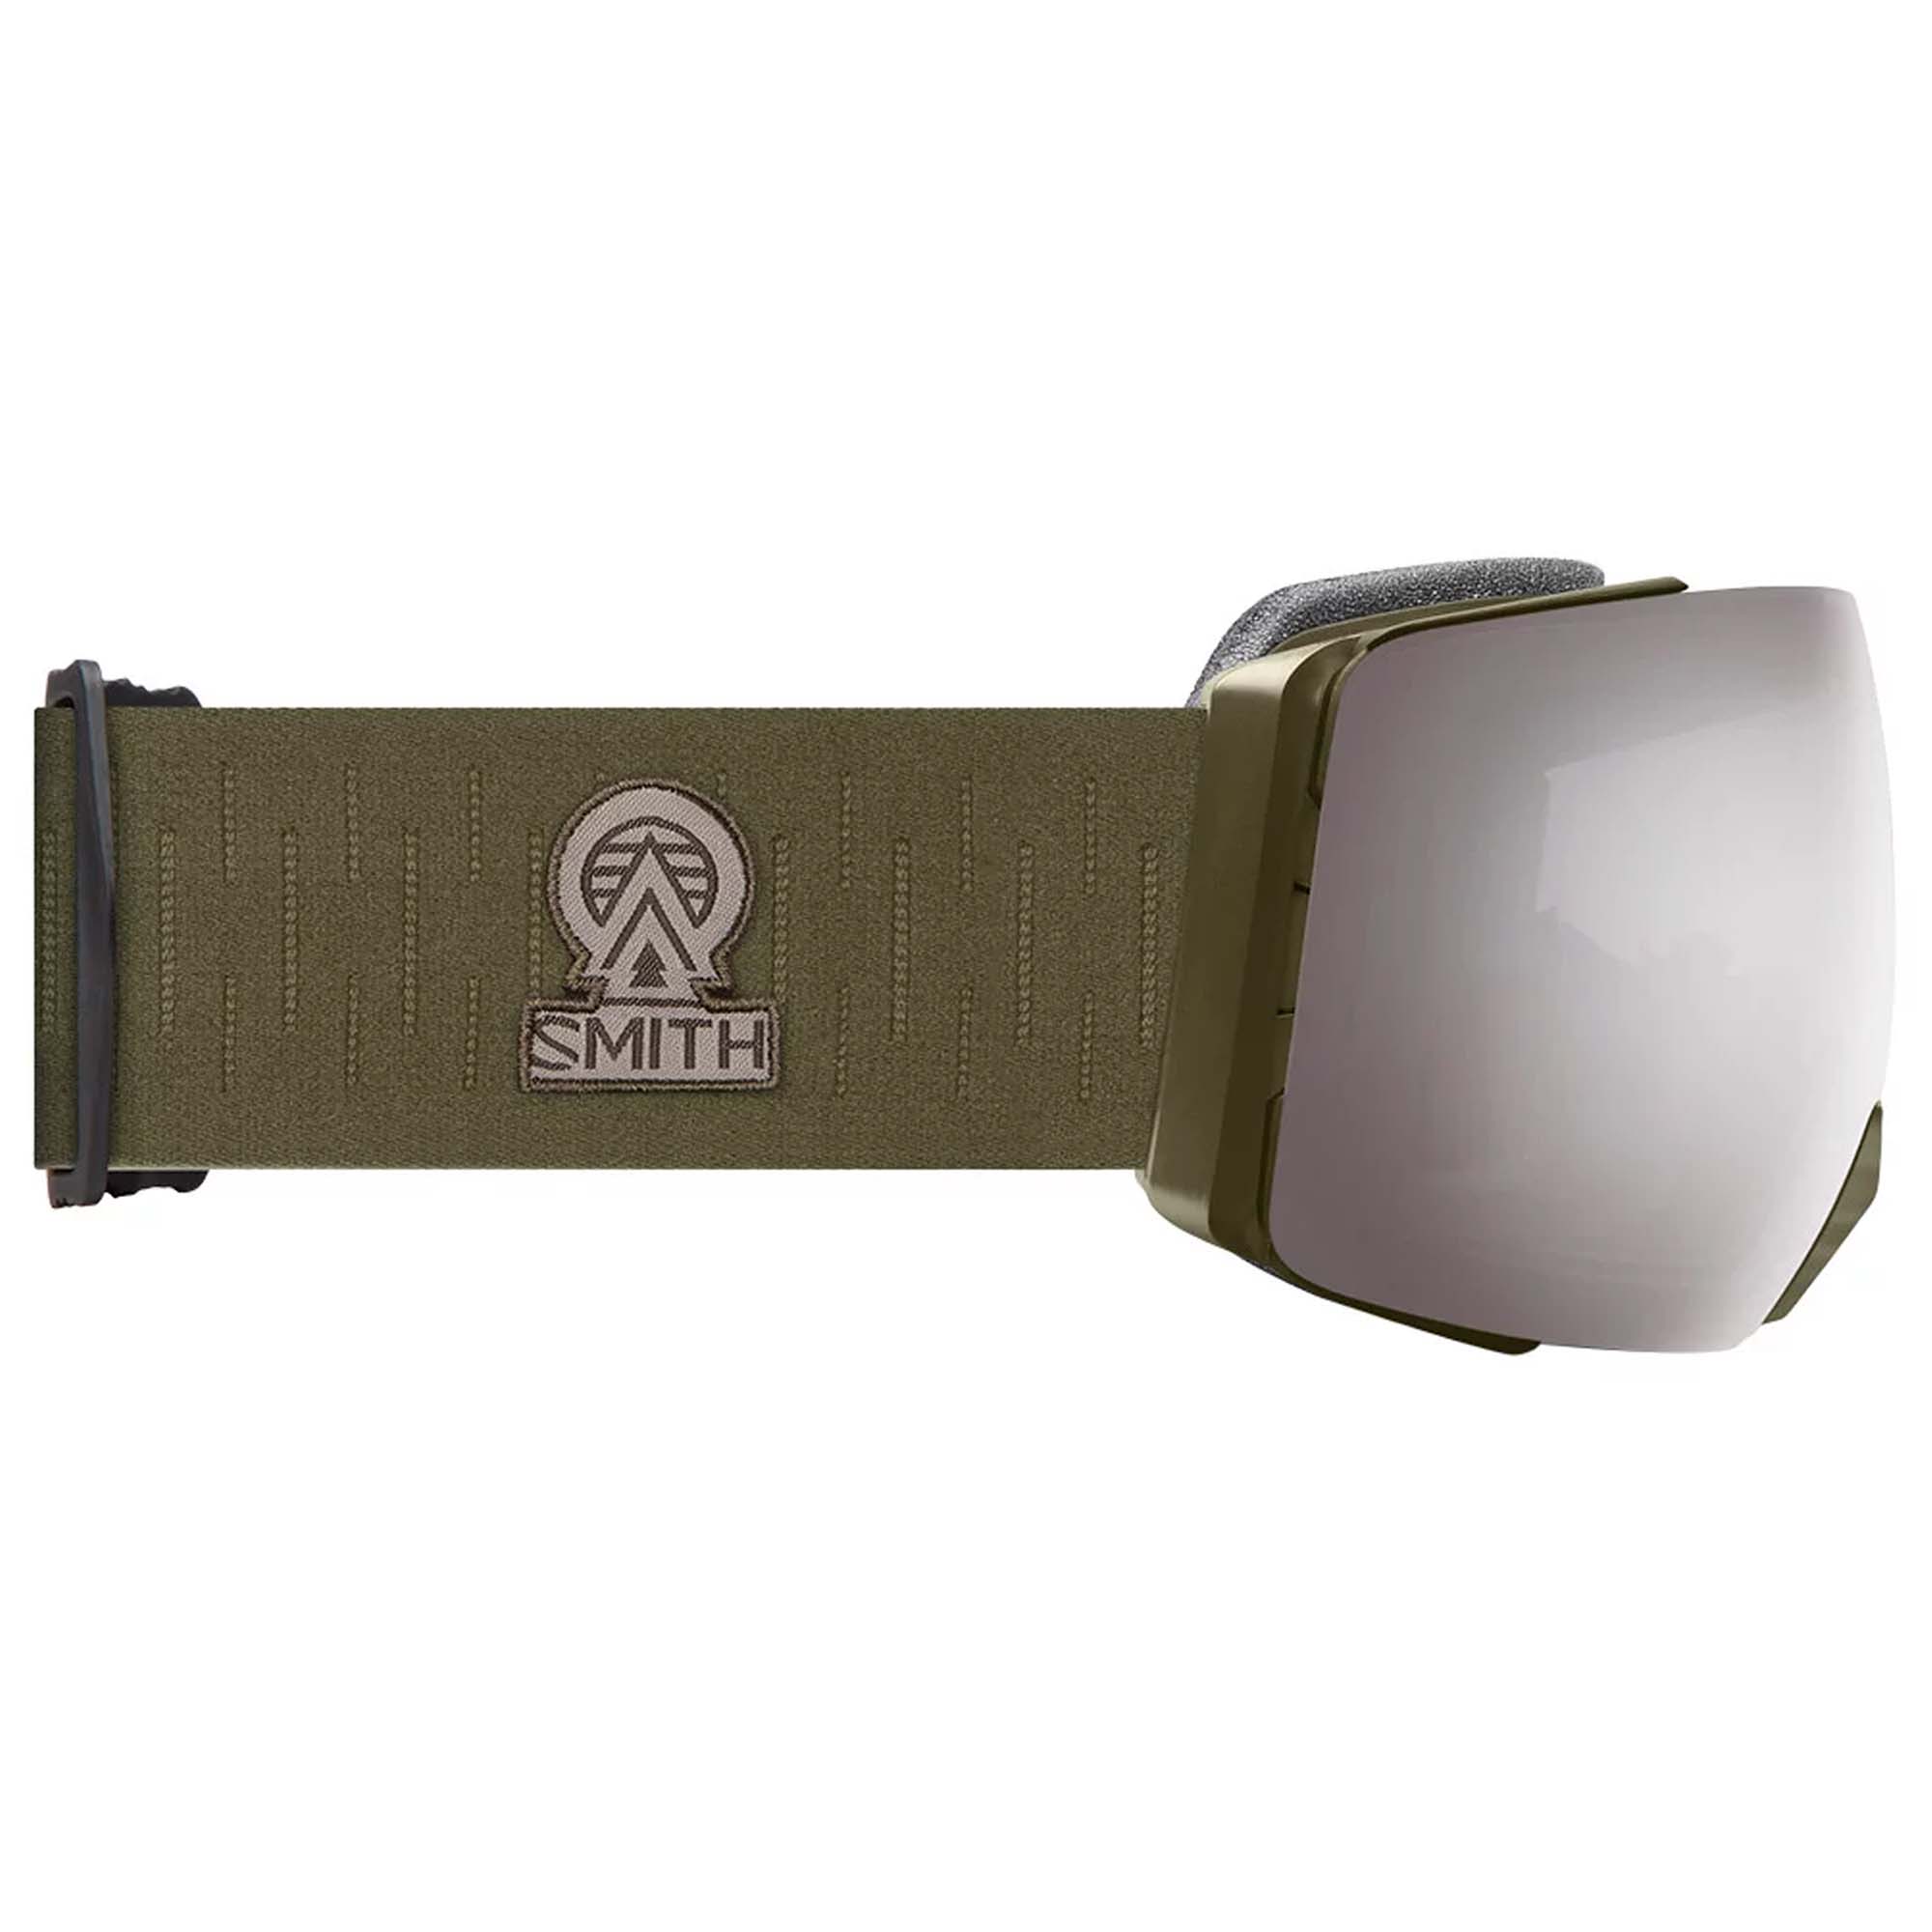 Smith I/O MAG XL Snowboard/Ski Goggles